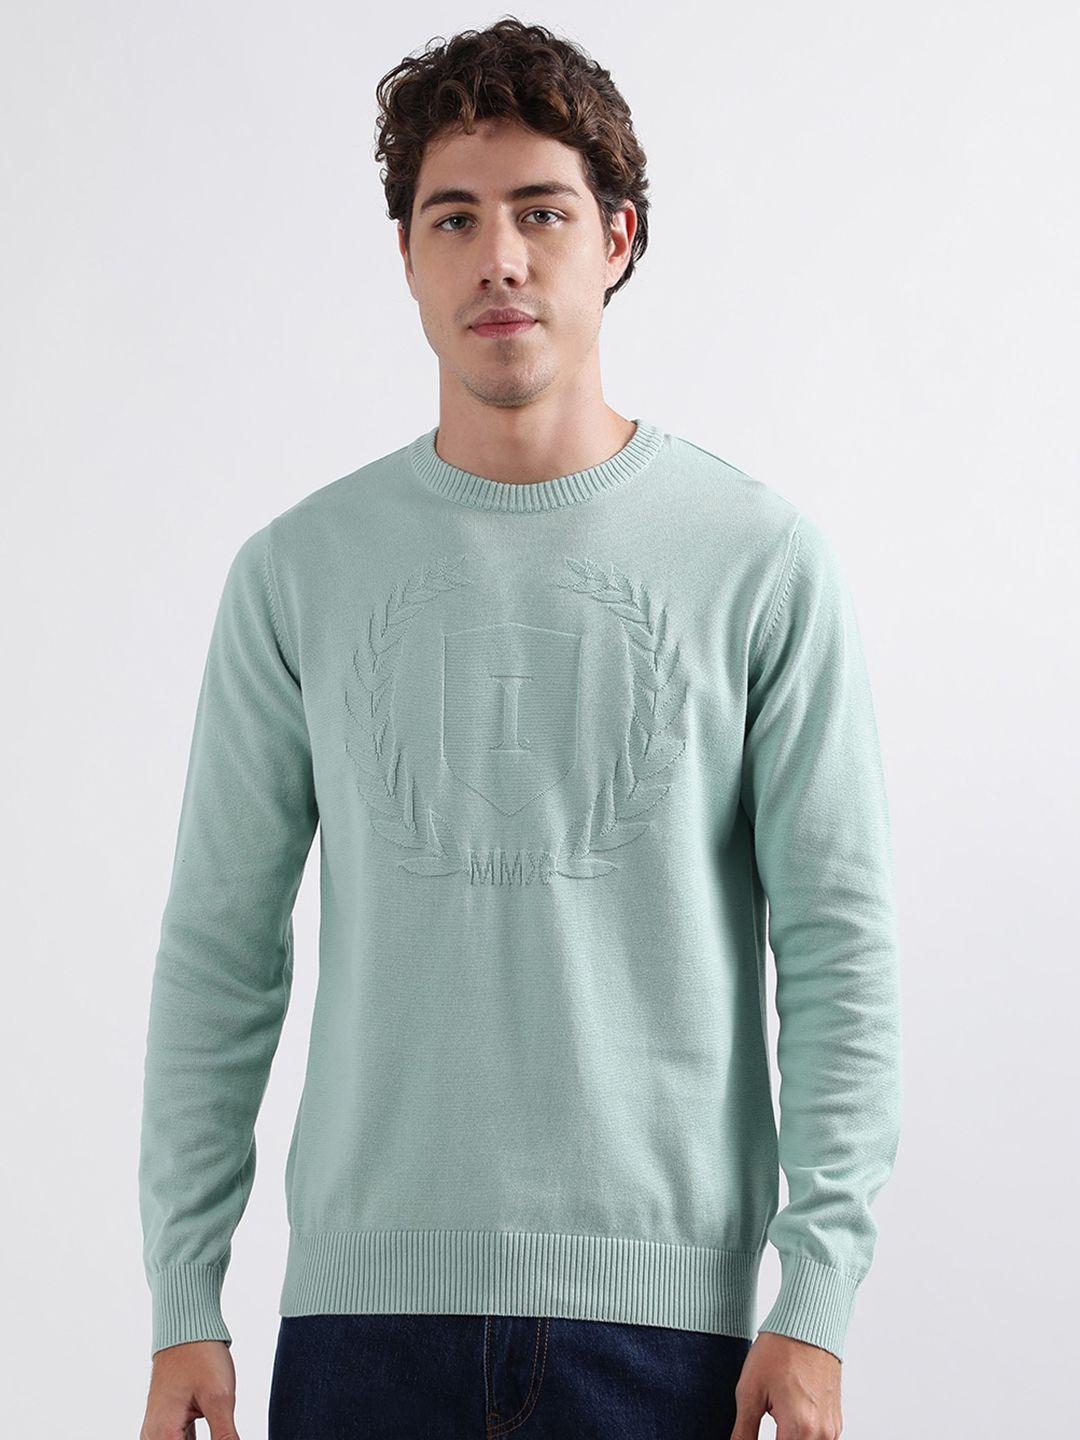 iconic round neck pure cotton pullover sweatshirt